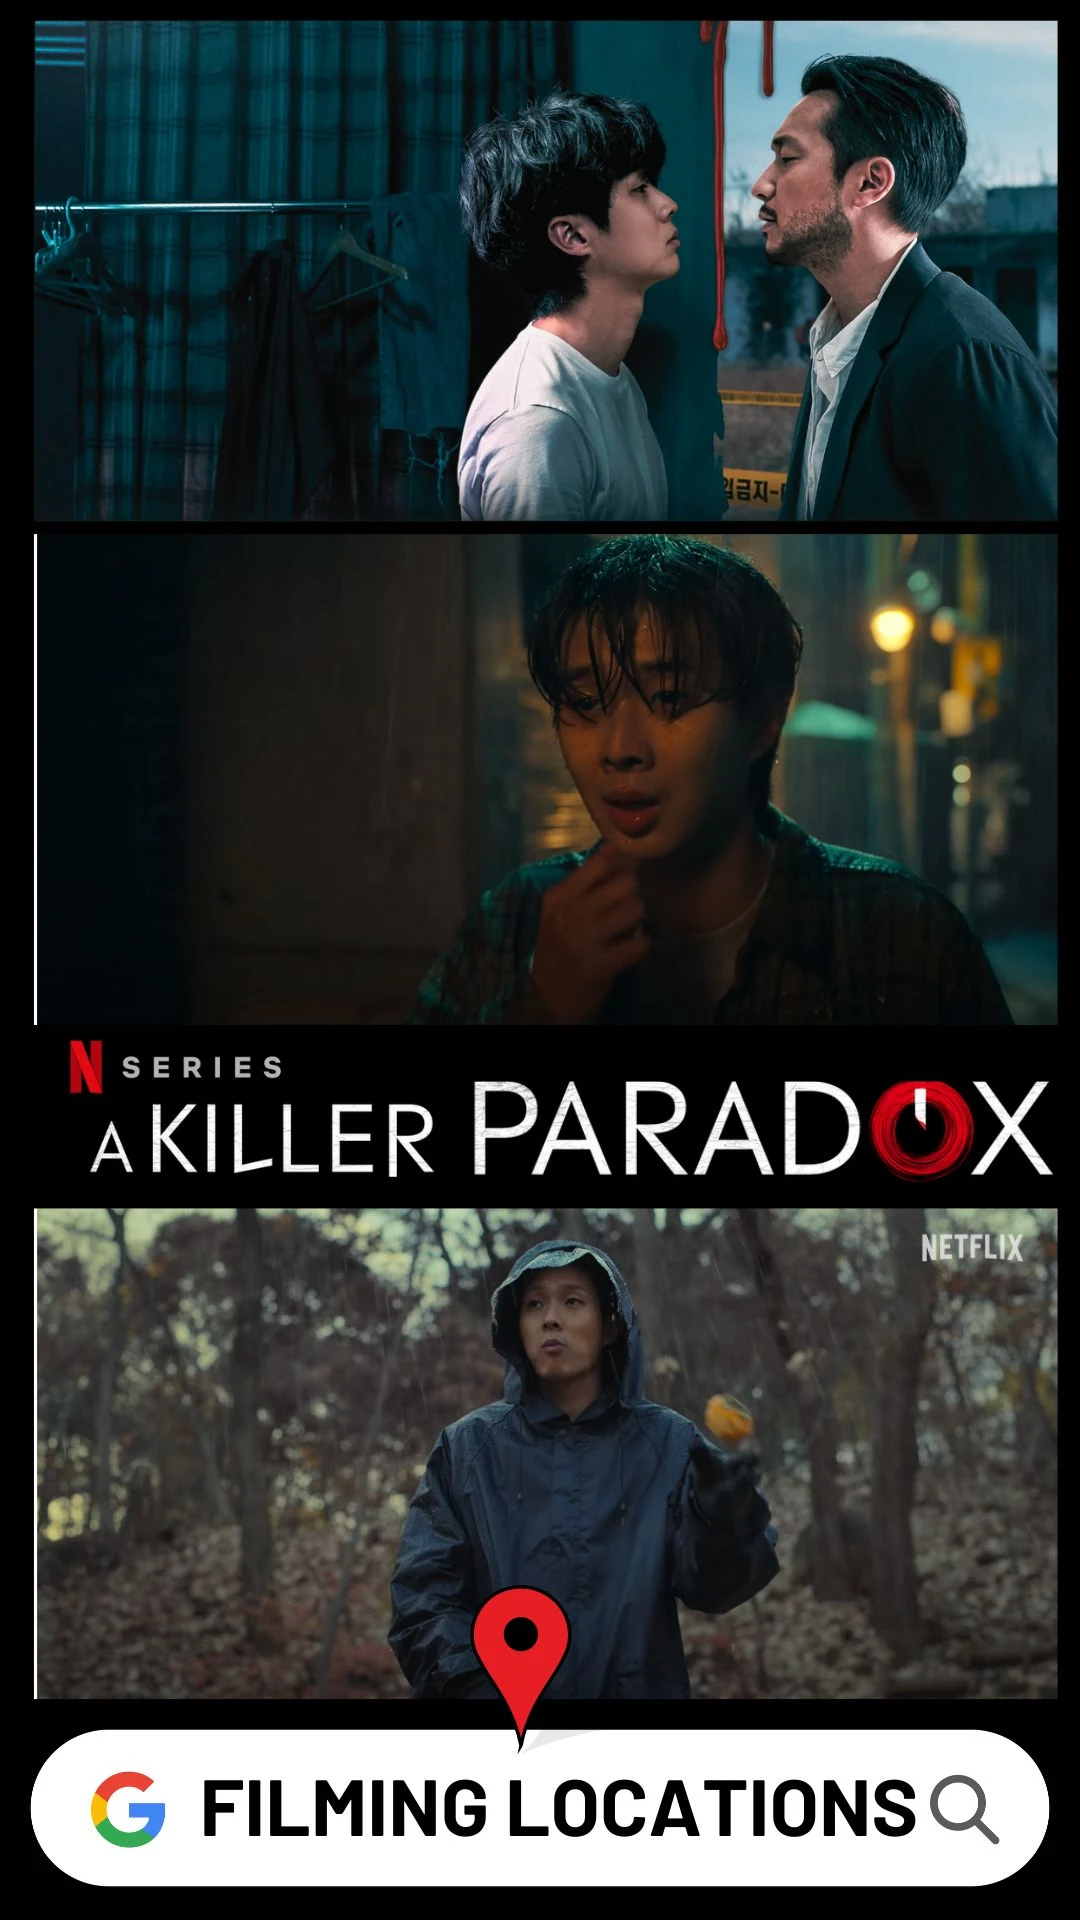 A Killer Paradox Filming Locations